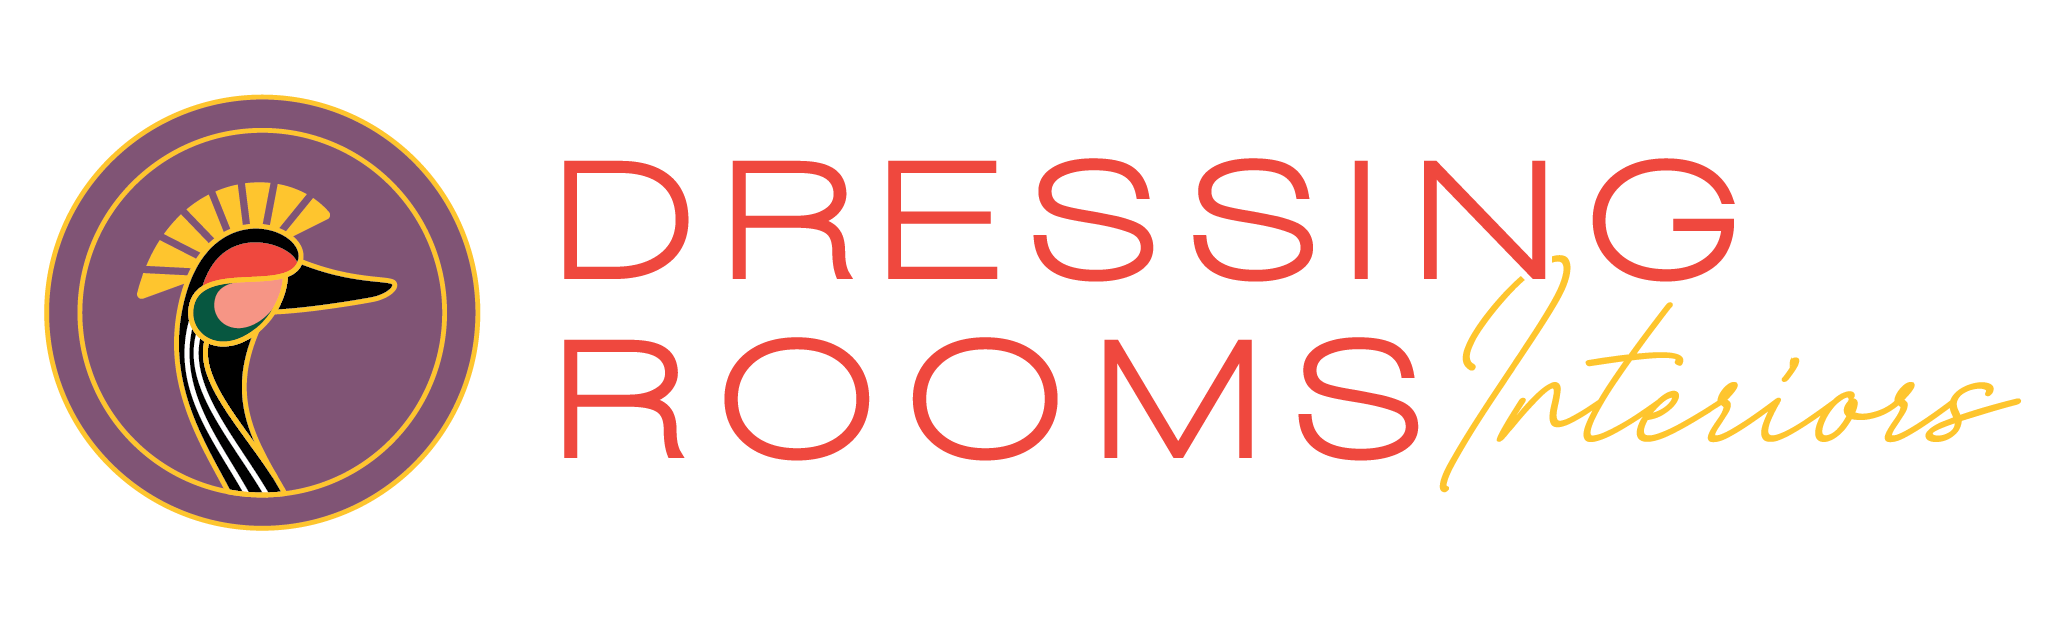 Dressing Rooms Interiors_Logos_Crane Badges_2_Horizontal_Color